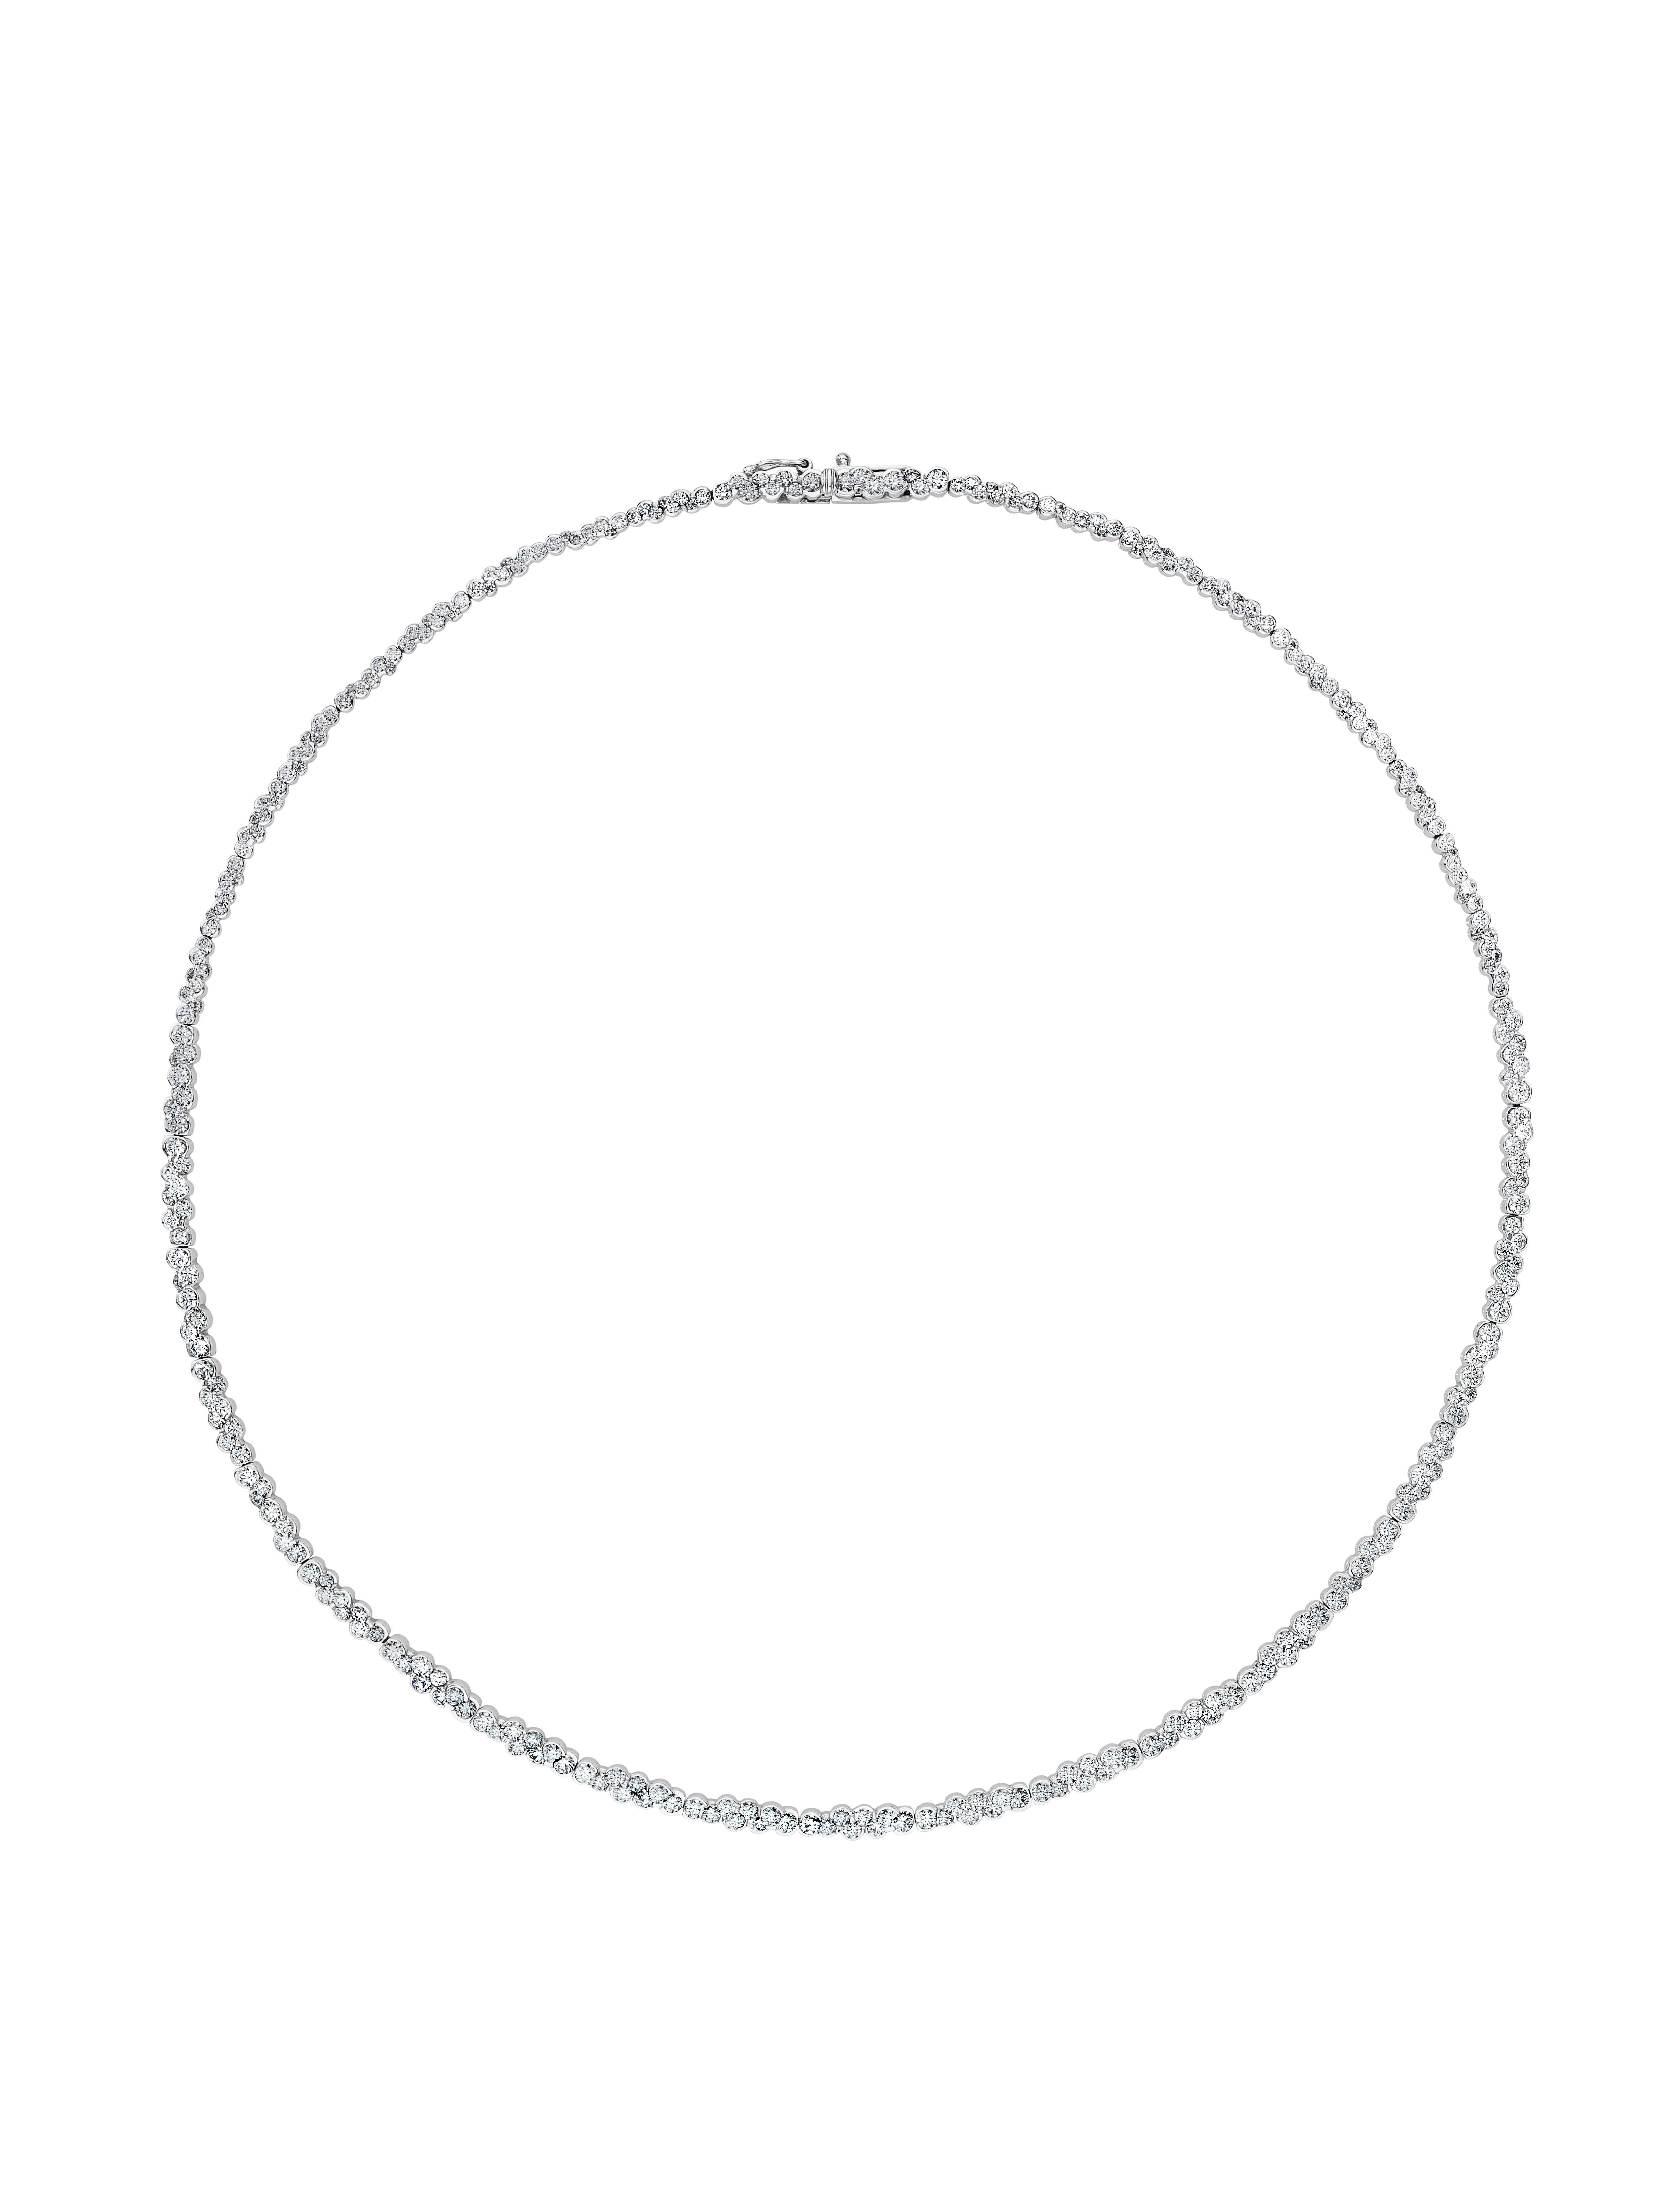 Lester Lampert Original CumuLLus Cellebration Diamond Necklace in 18 Karat WG In New Condition In Chicago, IL